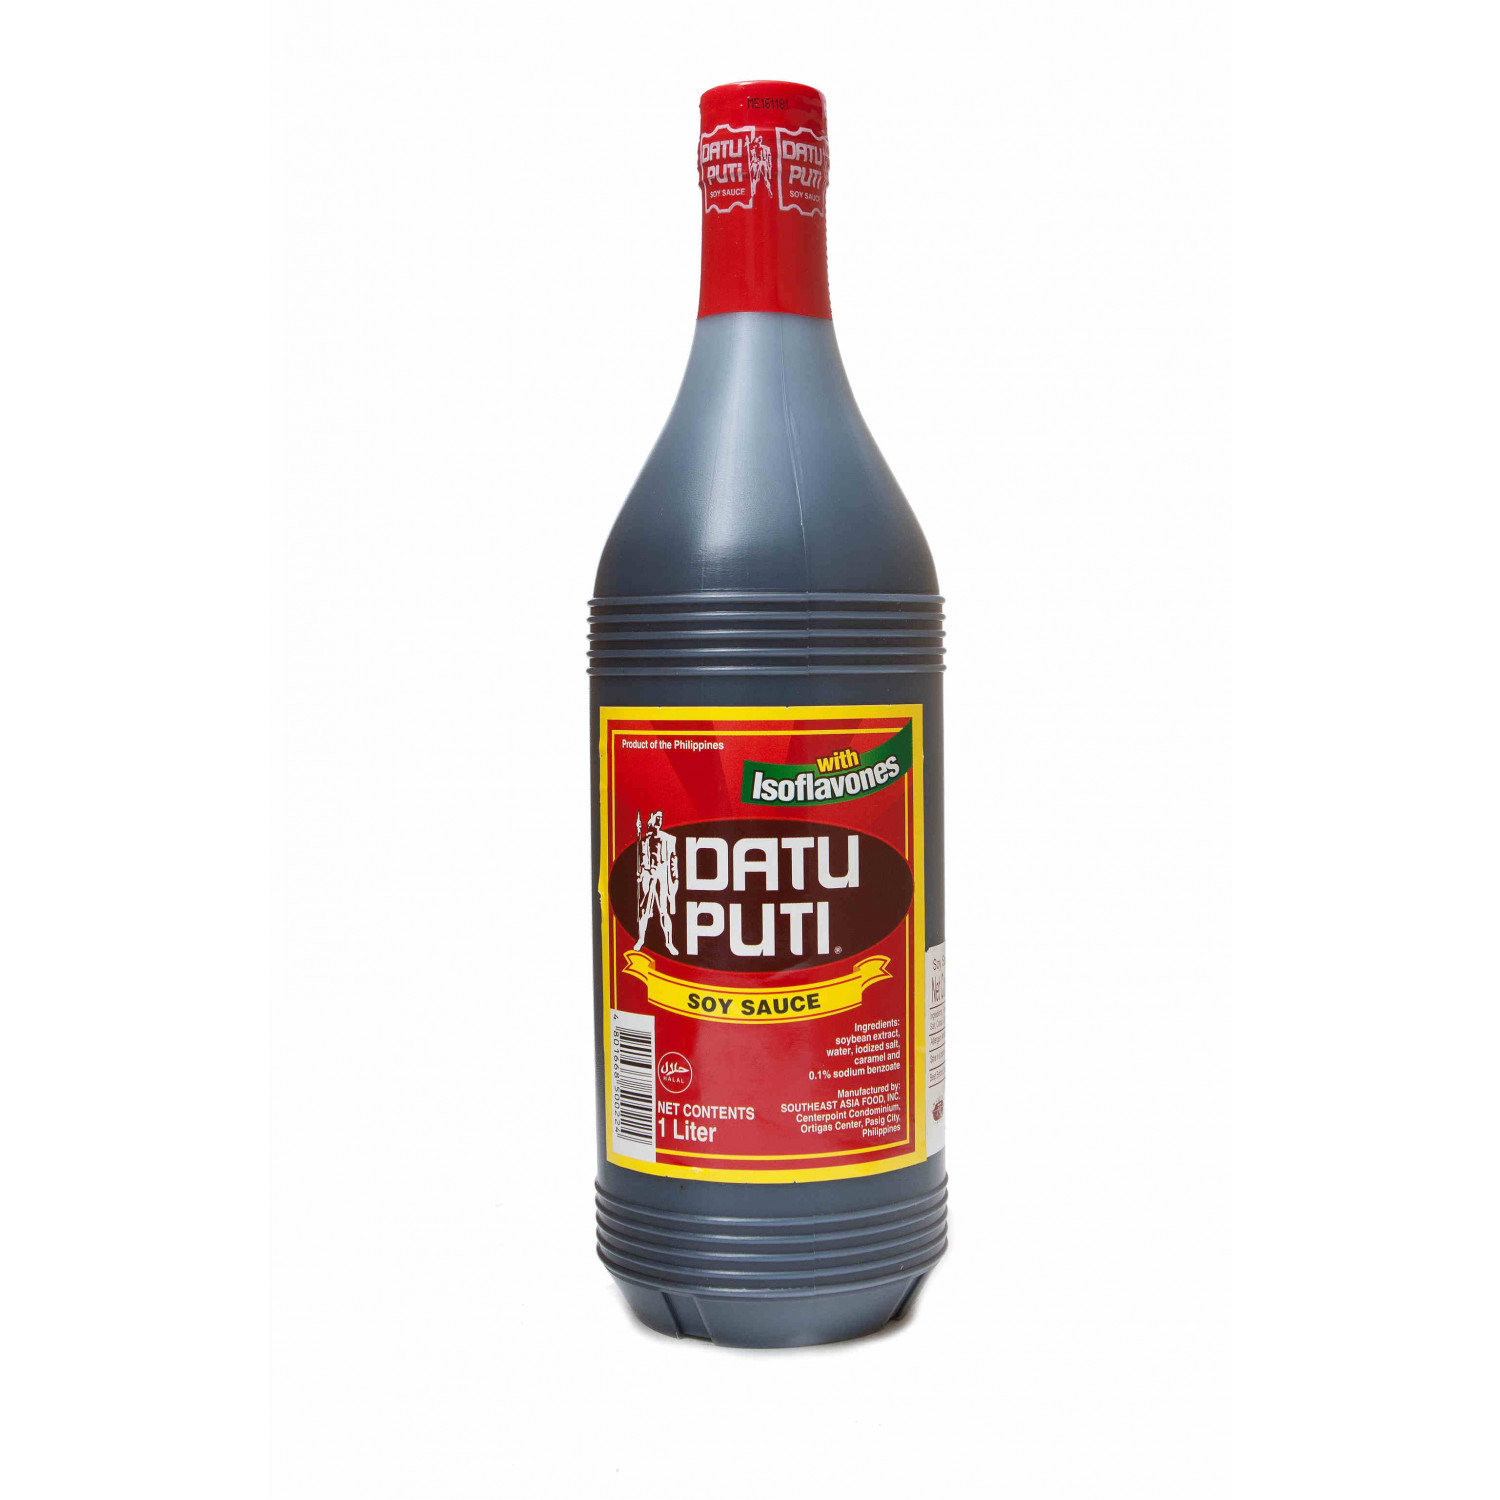 Datu Puti Soy Sauce 1 Liter Price Philippines